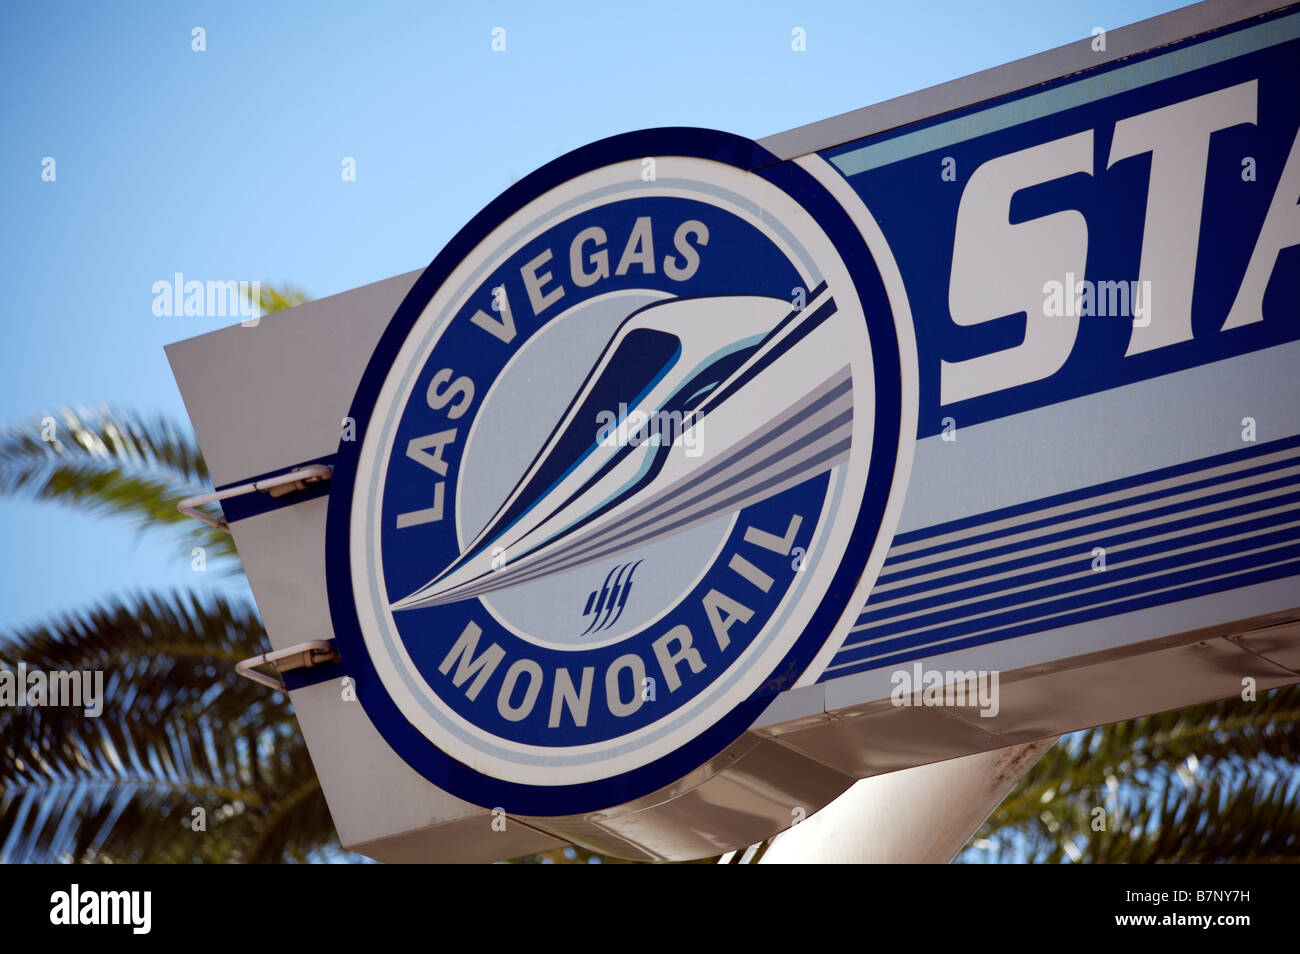 Las Vegas Monorail Entrance Sign Stock Photo